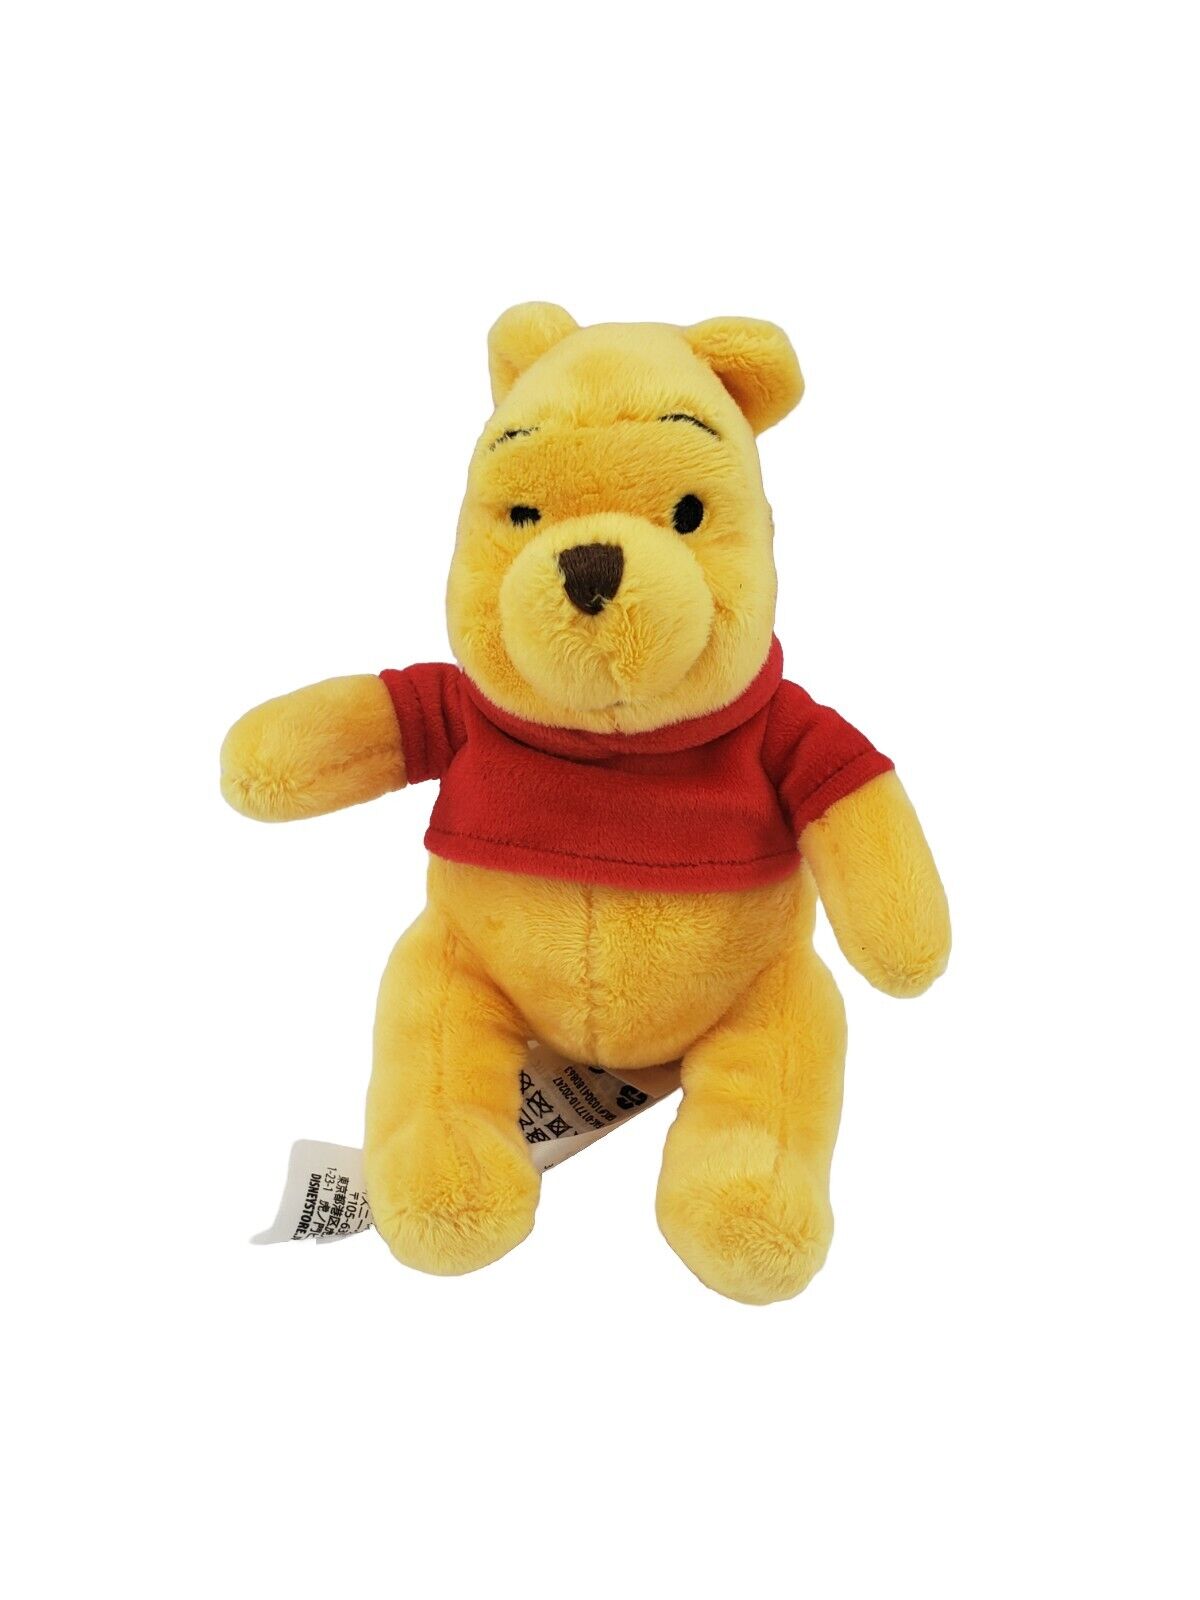 Disney Store Winnie The Pooh Small 7 inch Plush Stuffed Animal